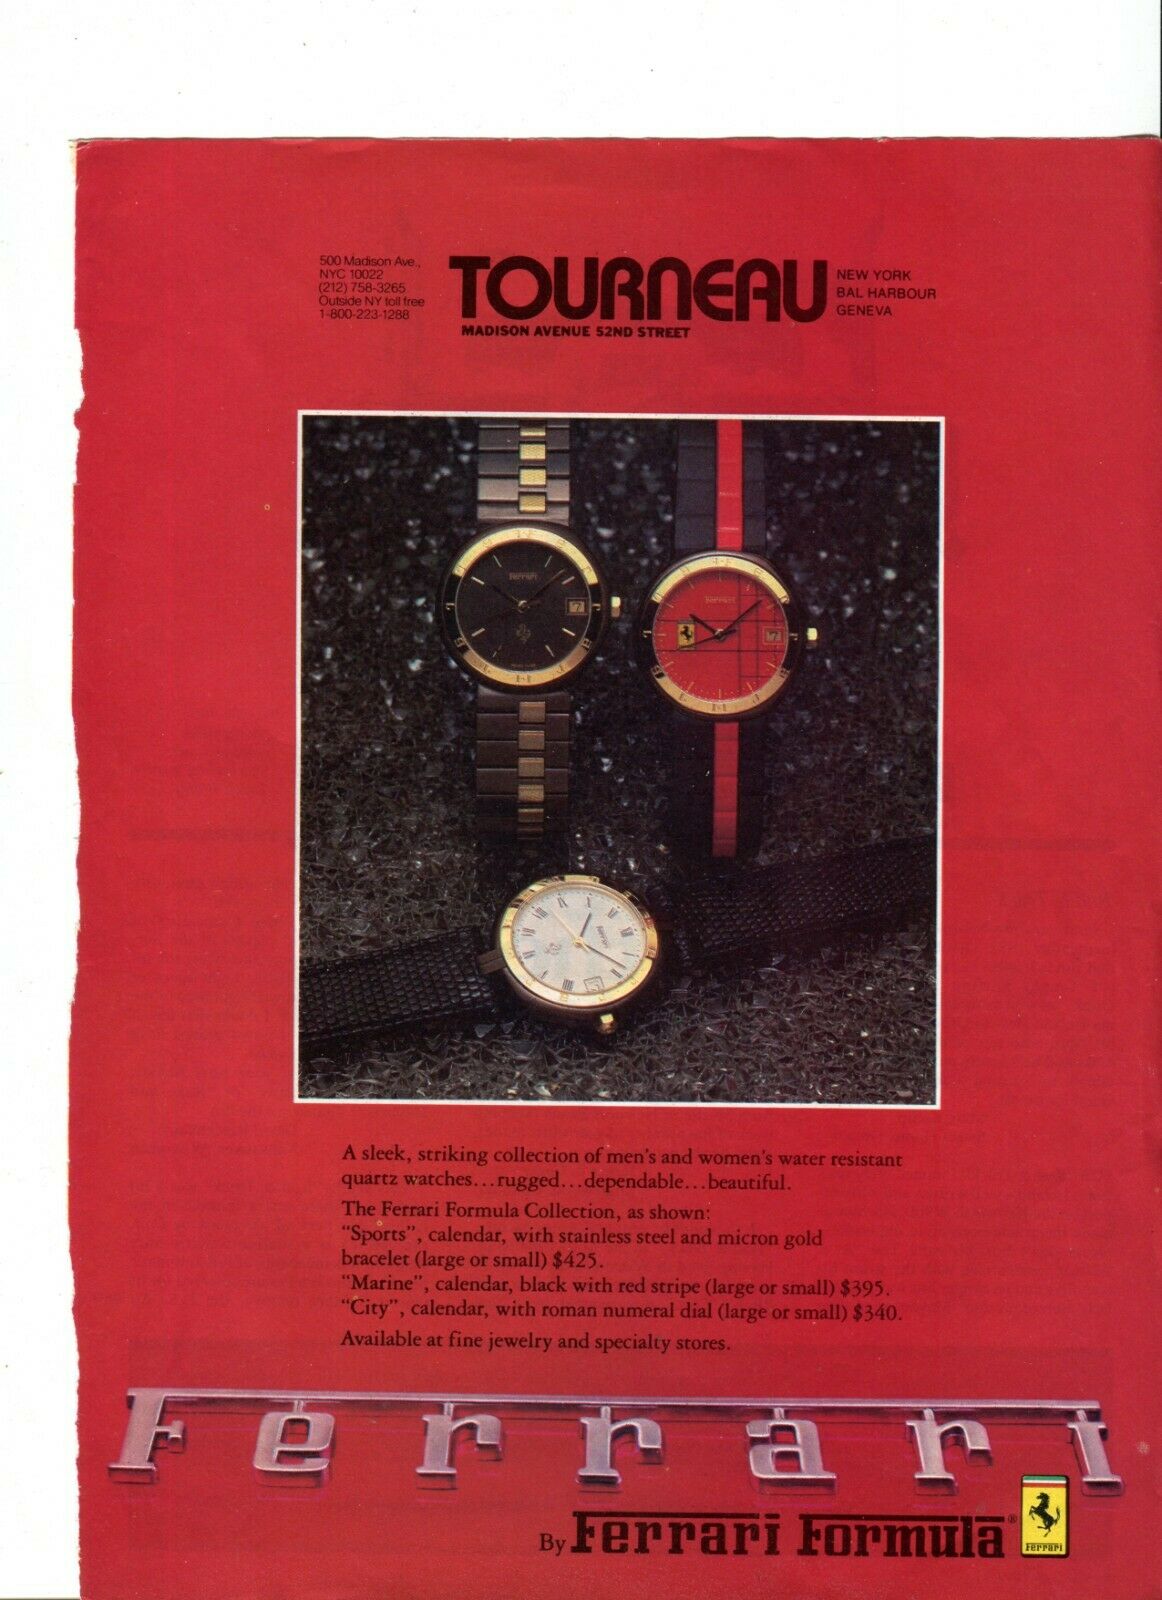 Vintage Tourneau Watch Magazine Ad For Ferrari Collection - Man Cave Garage Art